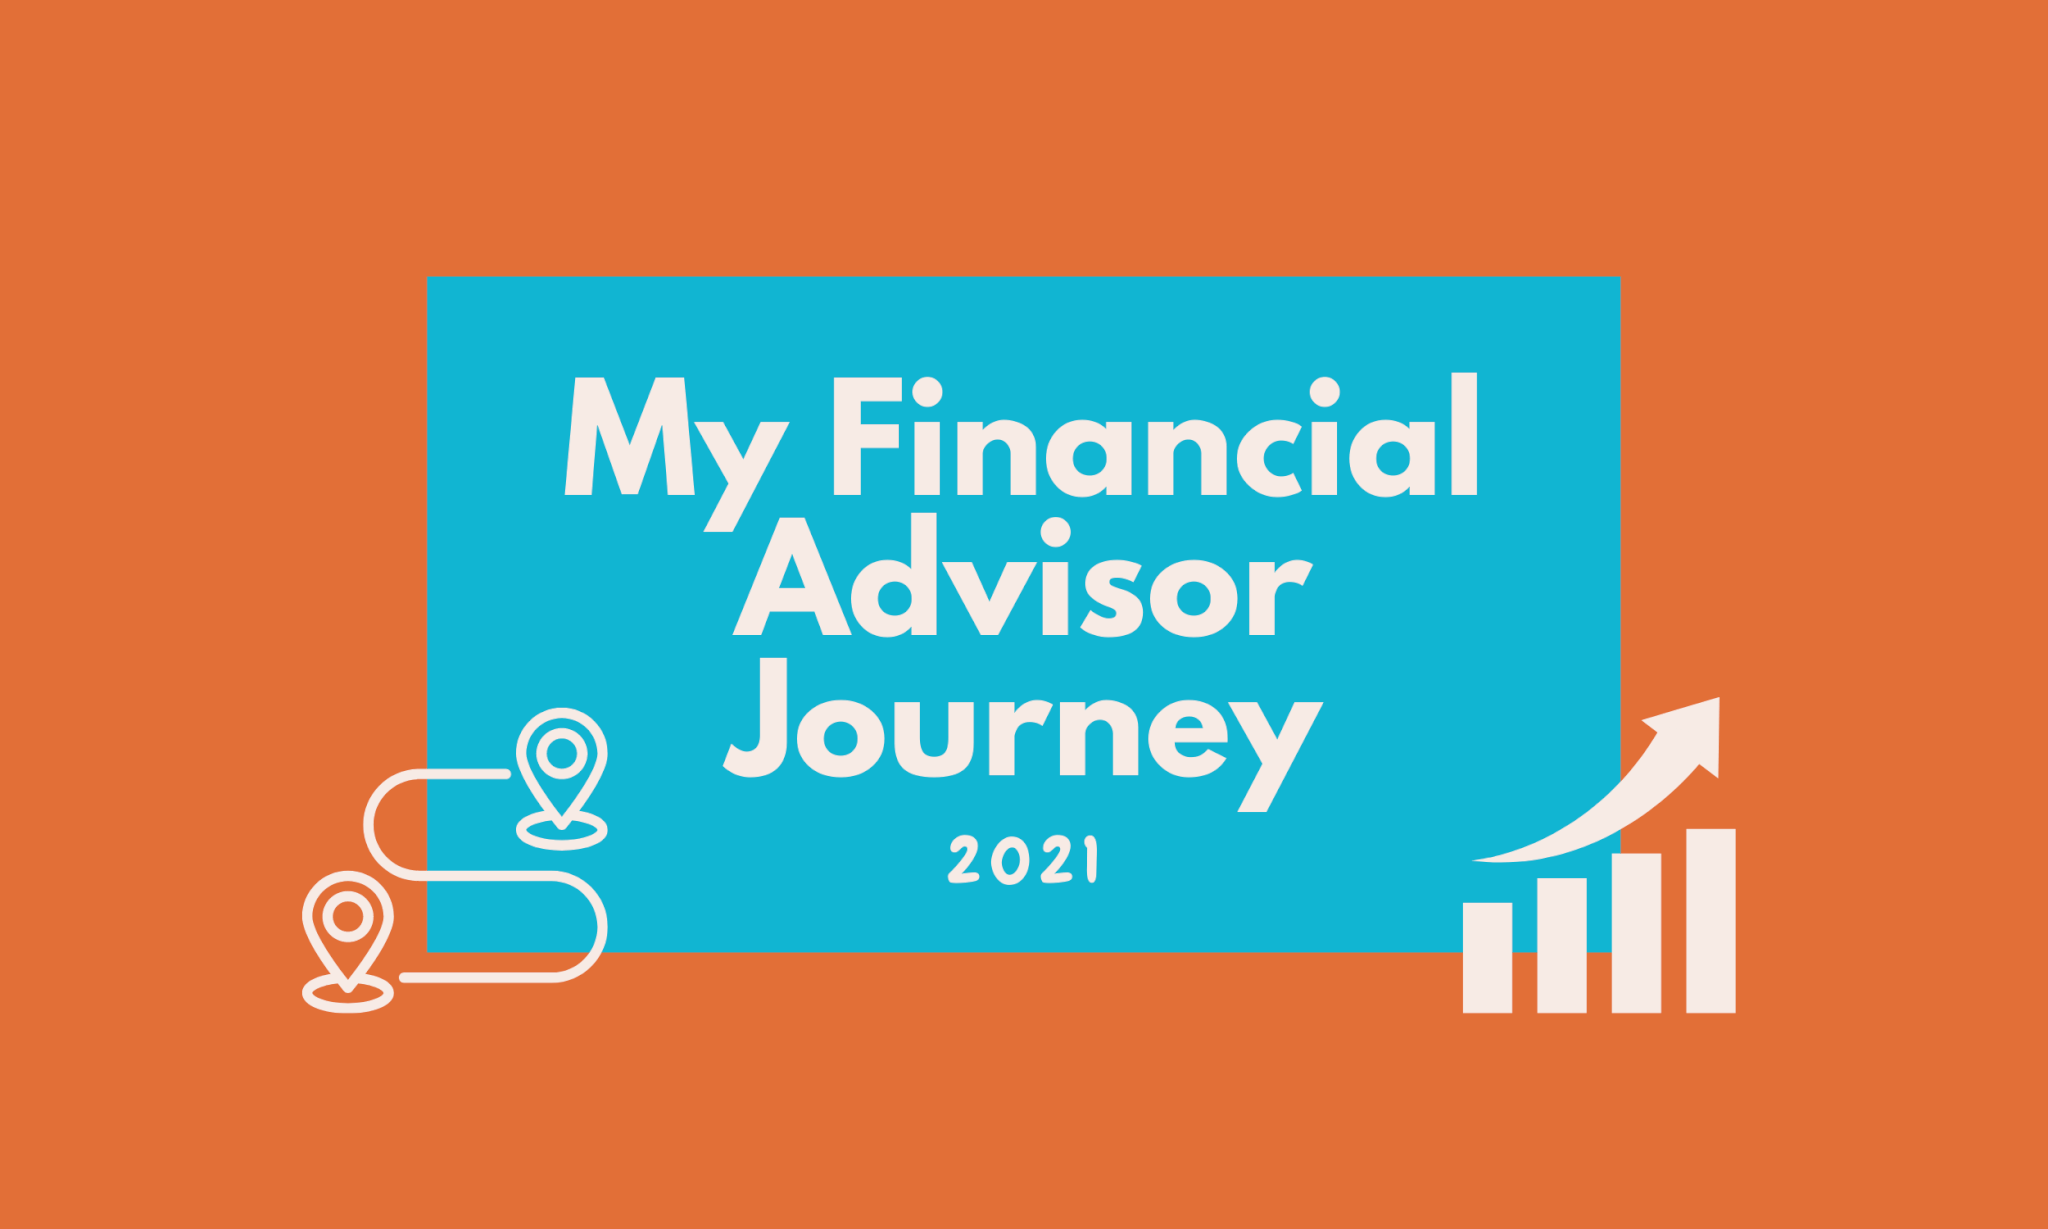 My 2021 Financial Advisor Journey